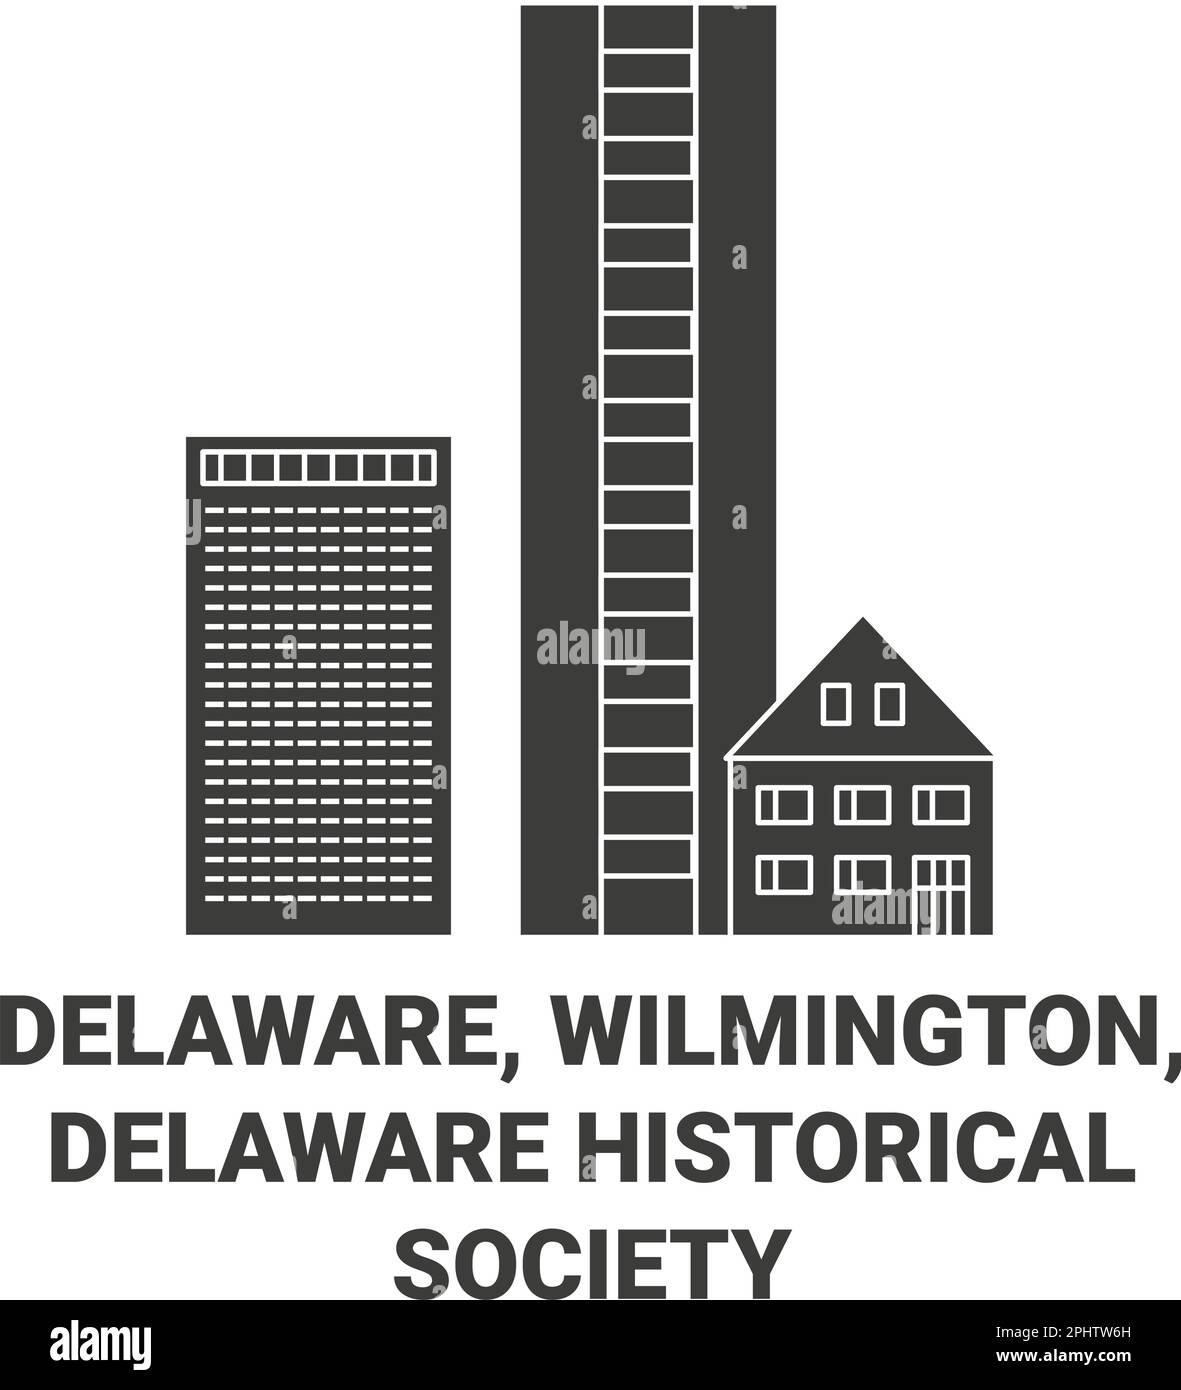 United States, Delaware, Wilmington, Delaware Historical Society travel landmark vector illustration Stock Vector